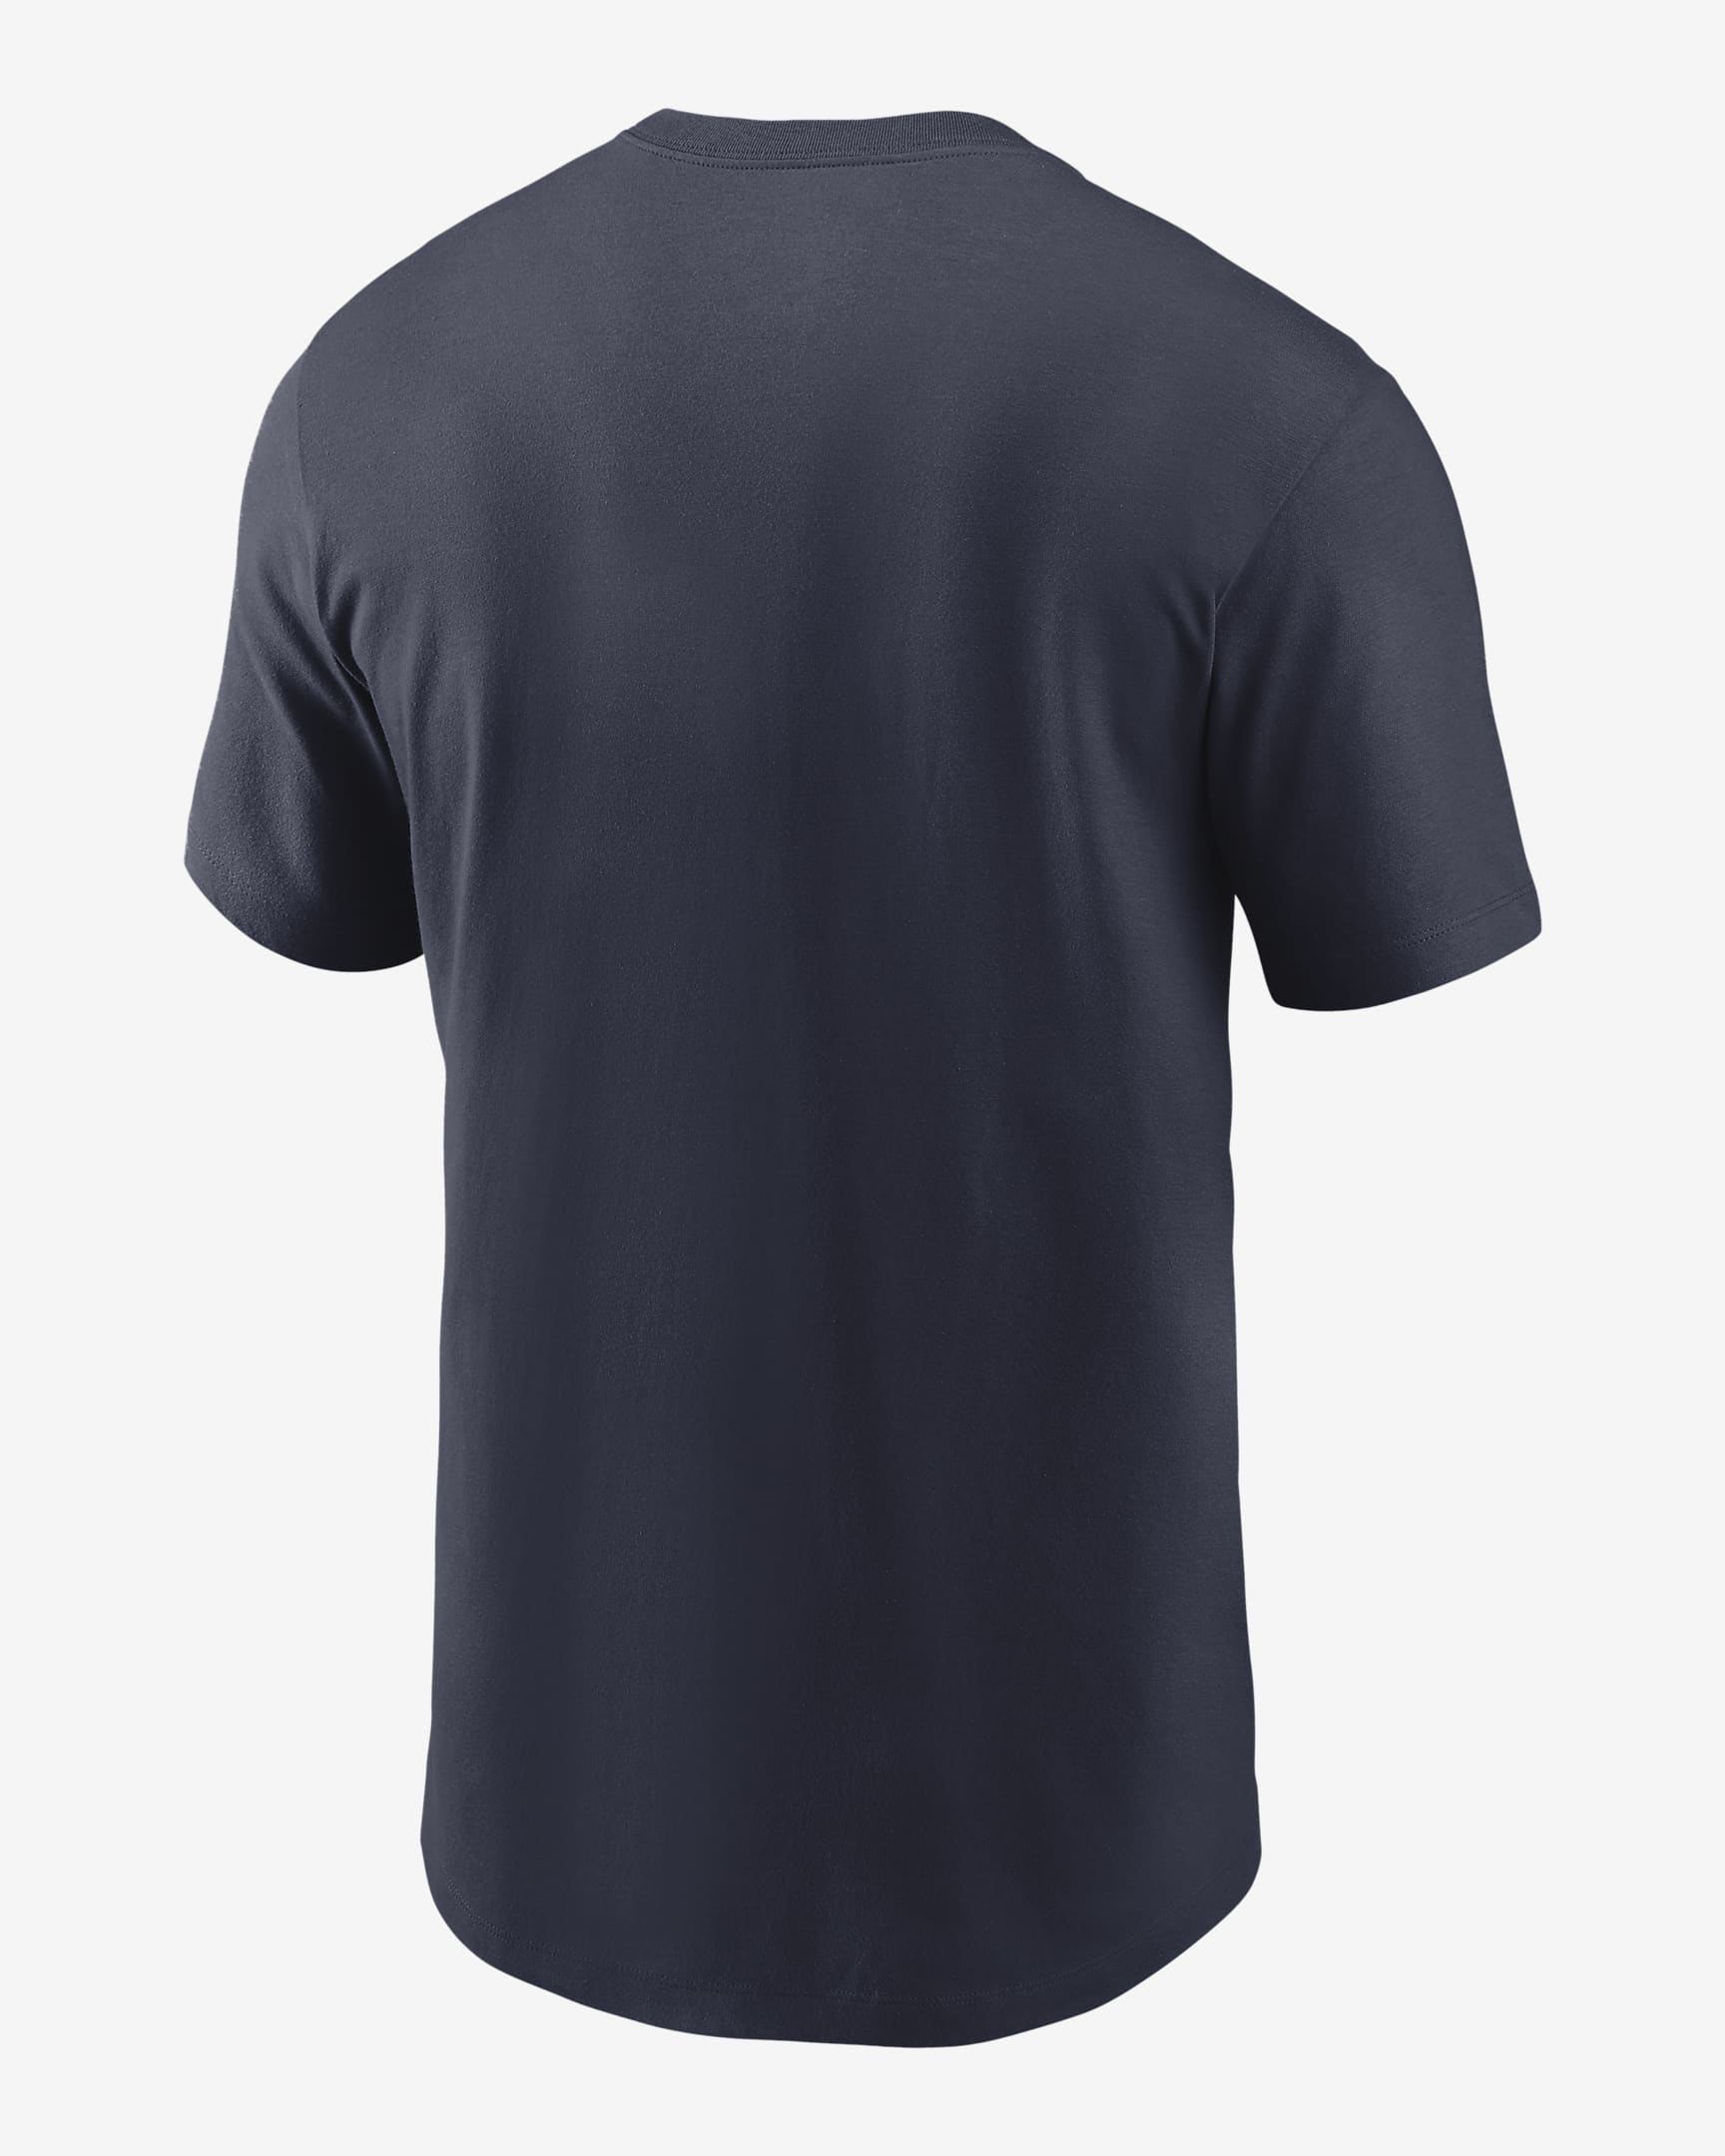 Nike Essential (NFL Tennessee Titans) Big Kids' (Boys') Logo T-Shirt ...